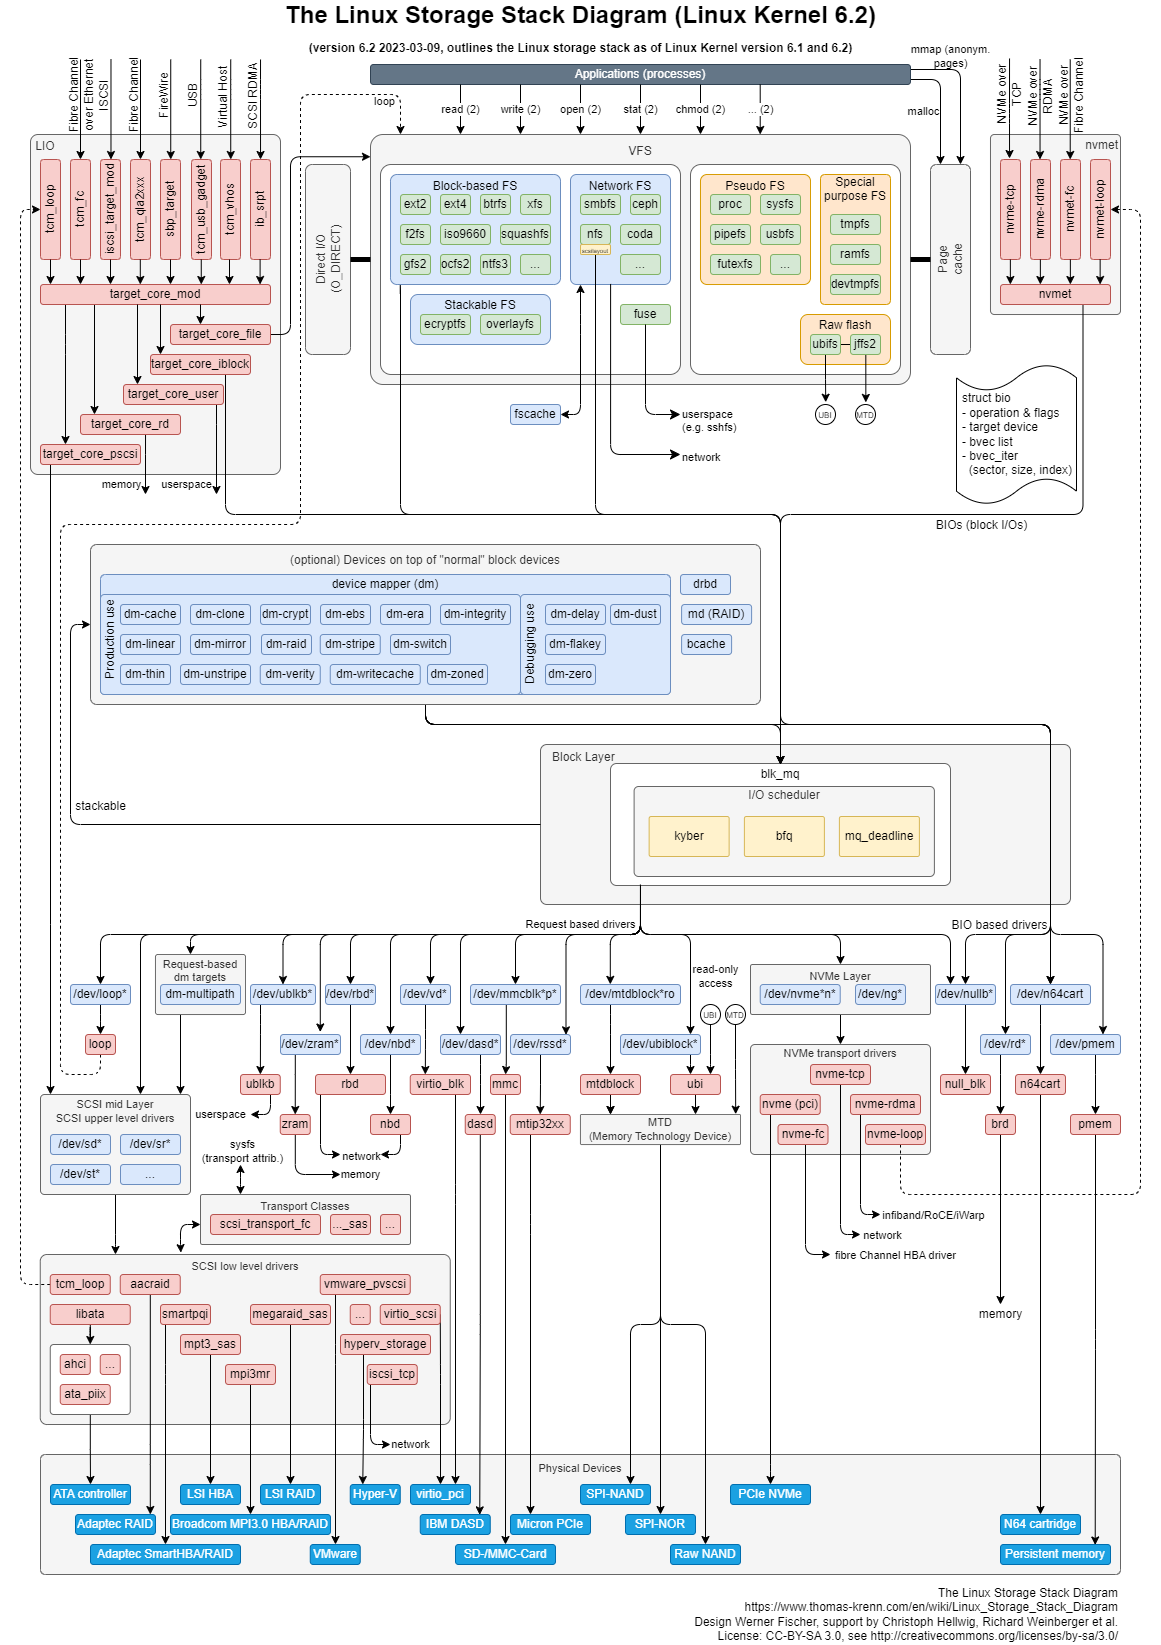 Linux-storage-stack-diagram v6.2